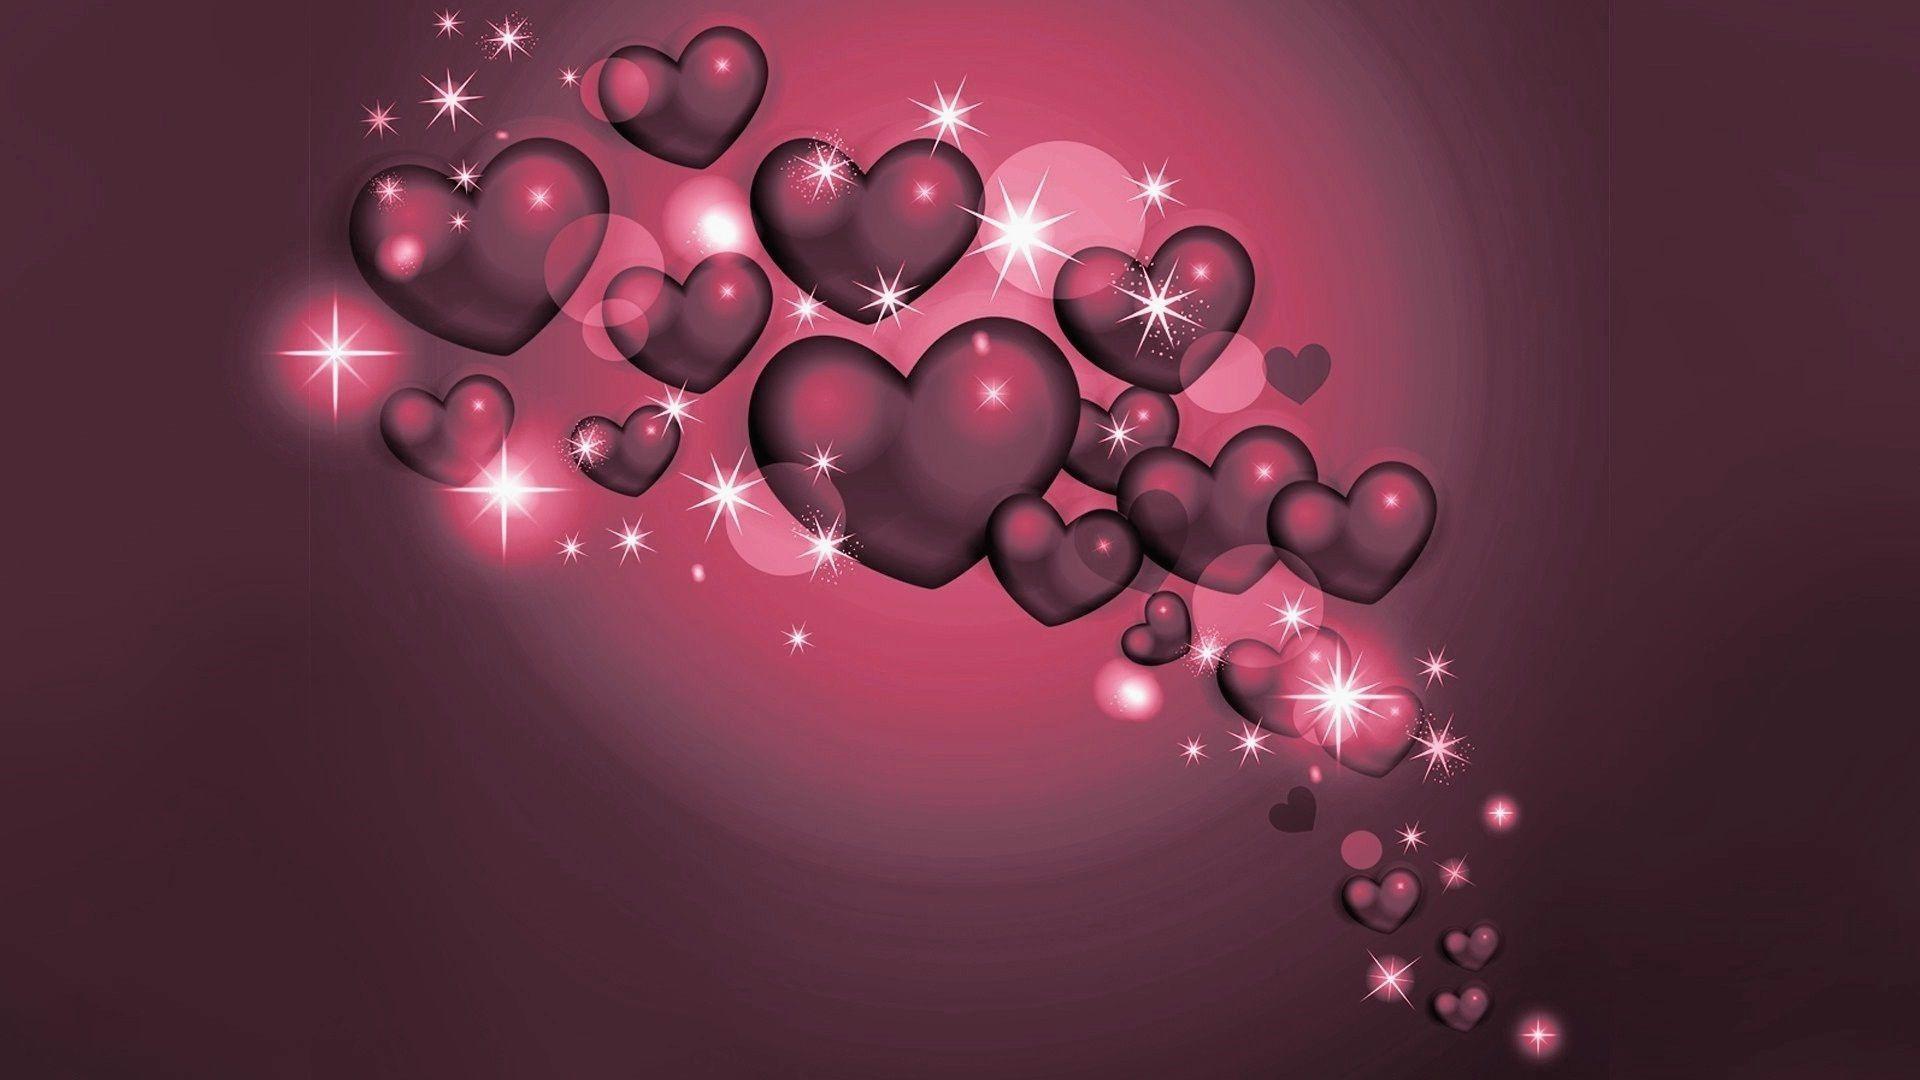 Amazing HD Wallpaper Of Love New Beautiful Love Heart Wallpaper HD